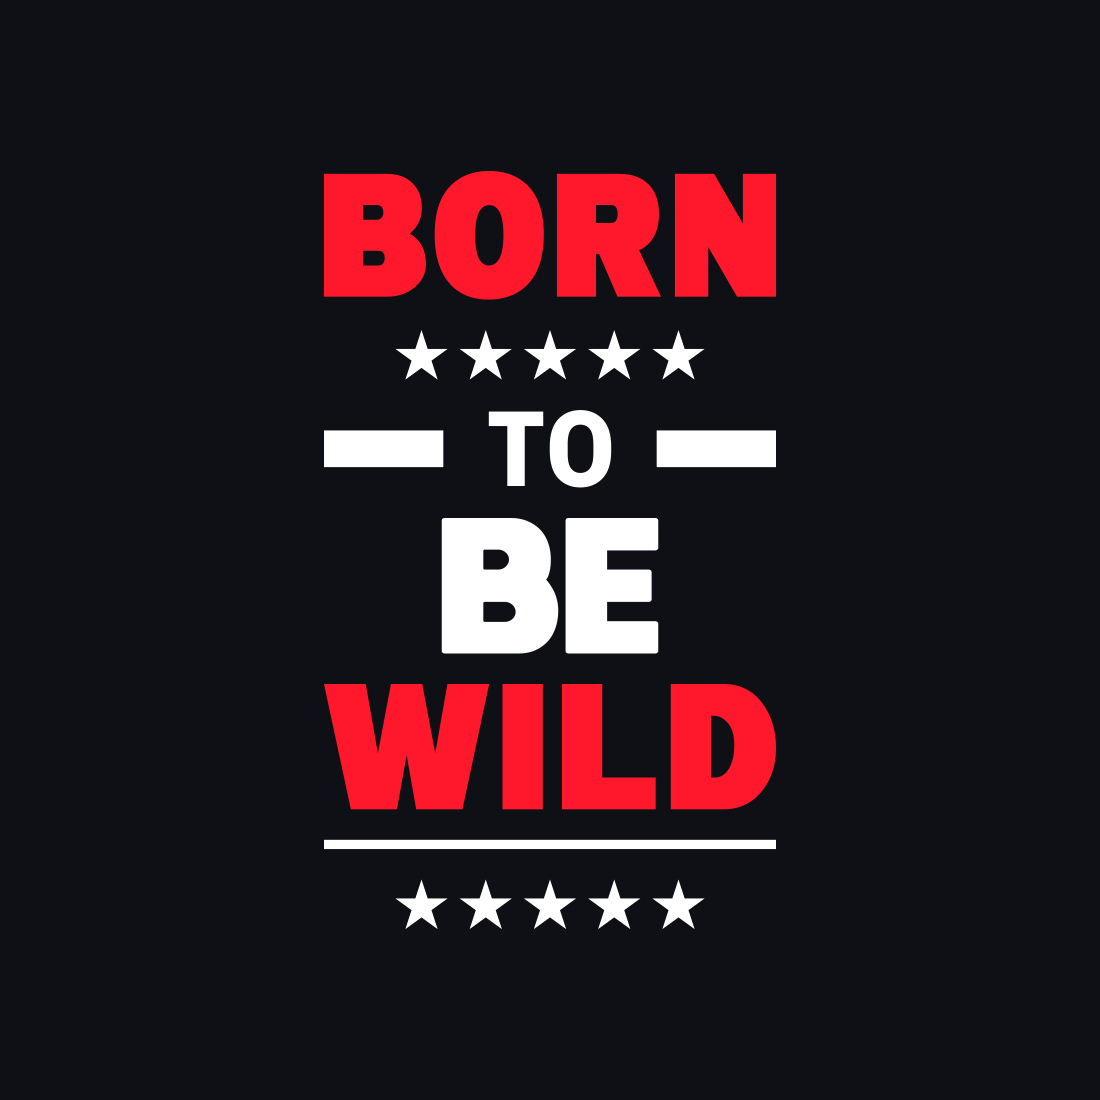 Born To Be Wild Typography T-shirt Design presentation.